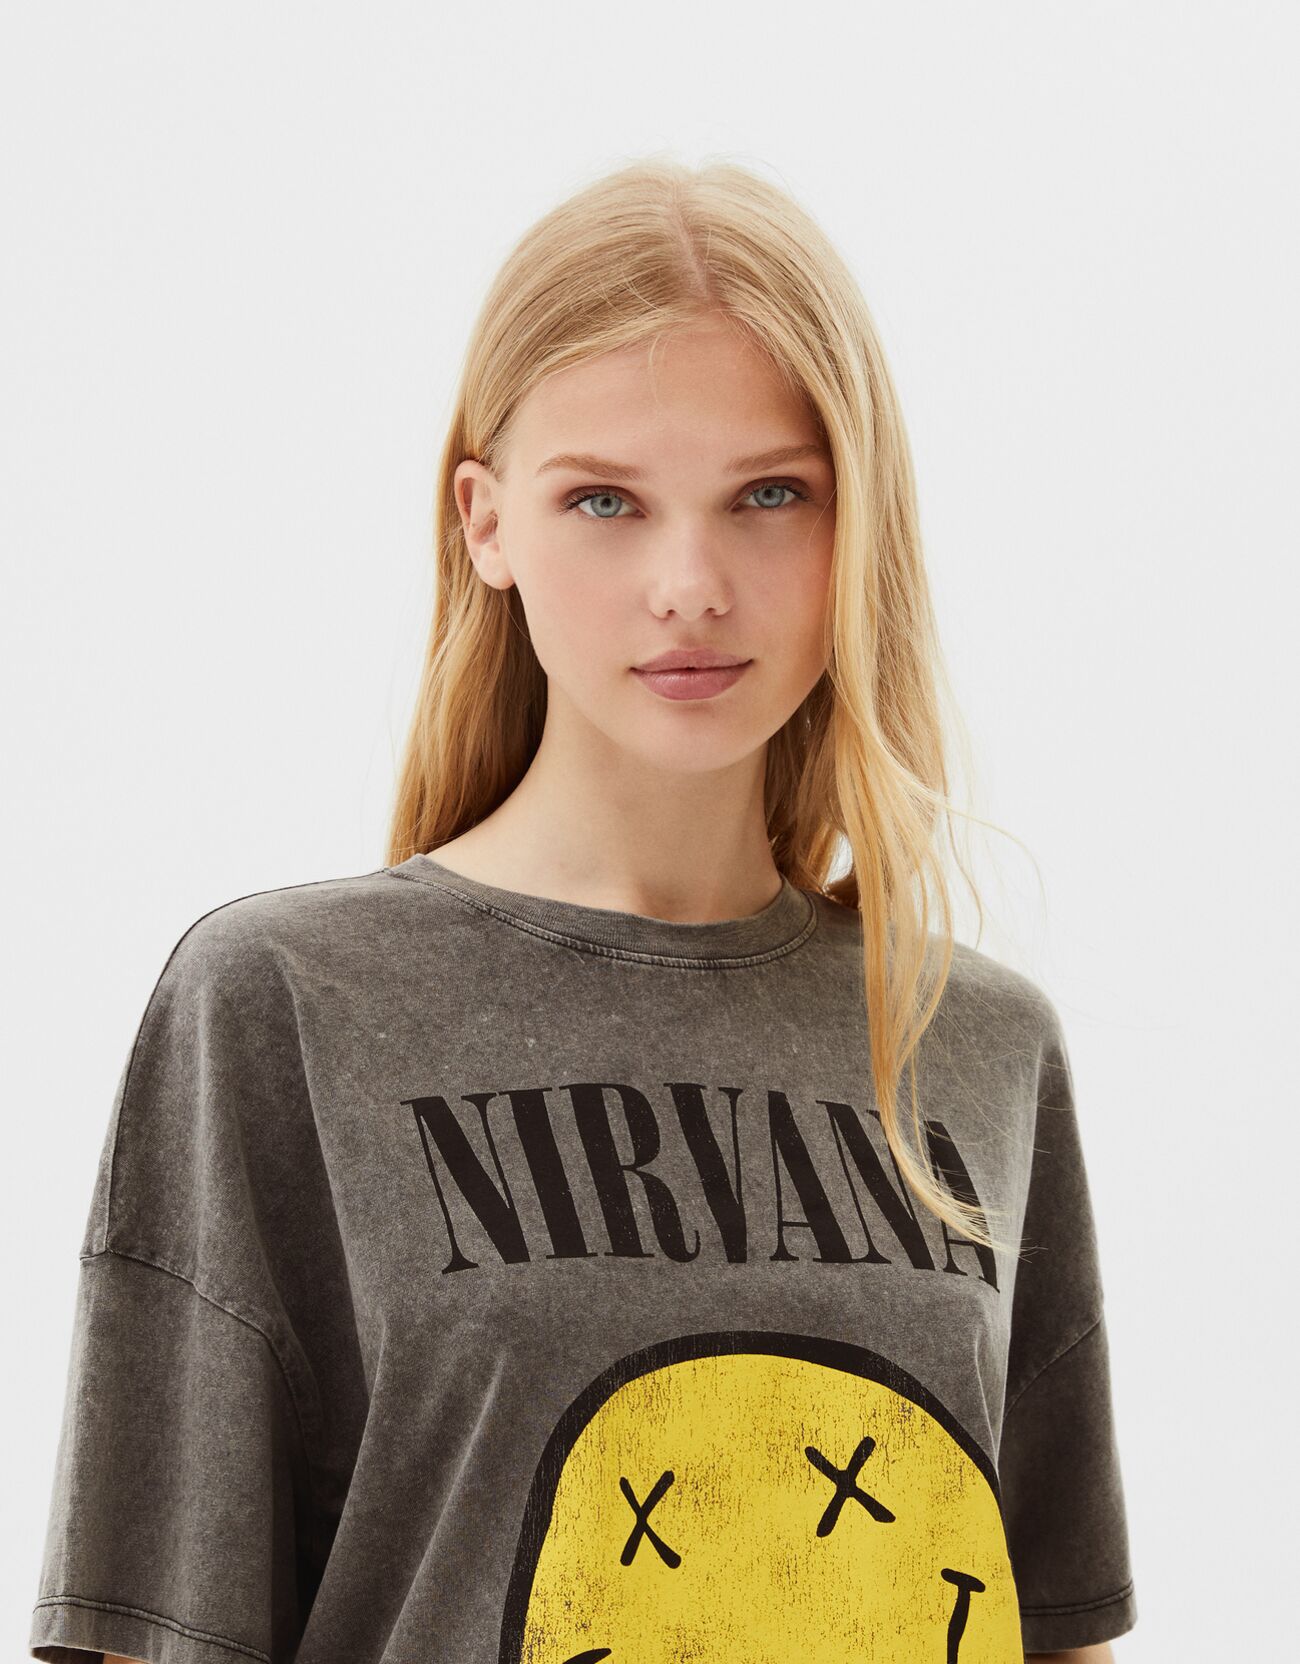 Surgir vestíbulo Tiranía Bershka - Camiseta manga corta Nirvana print happy face